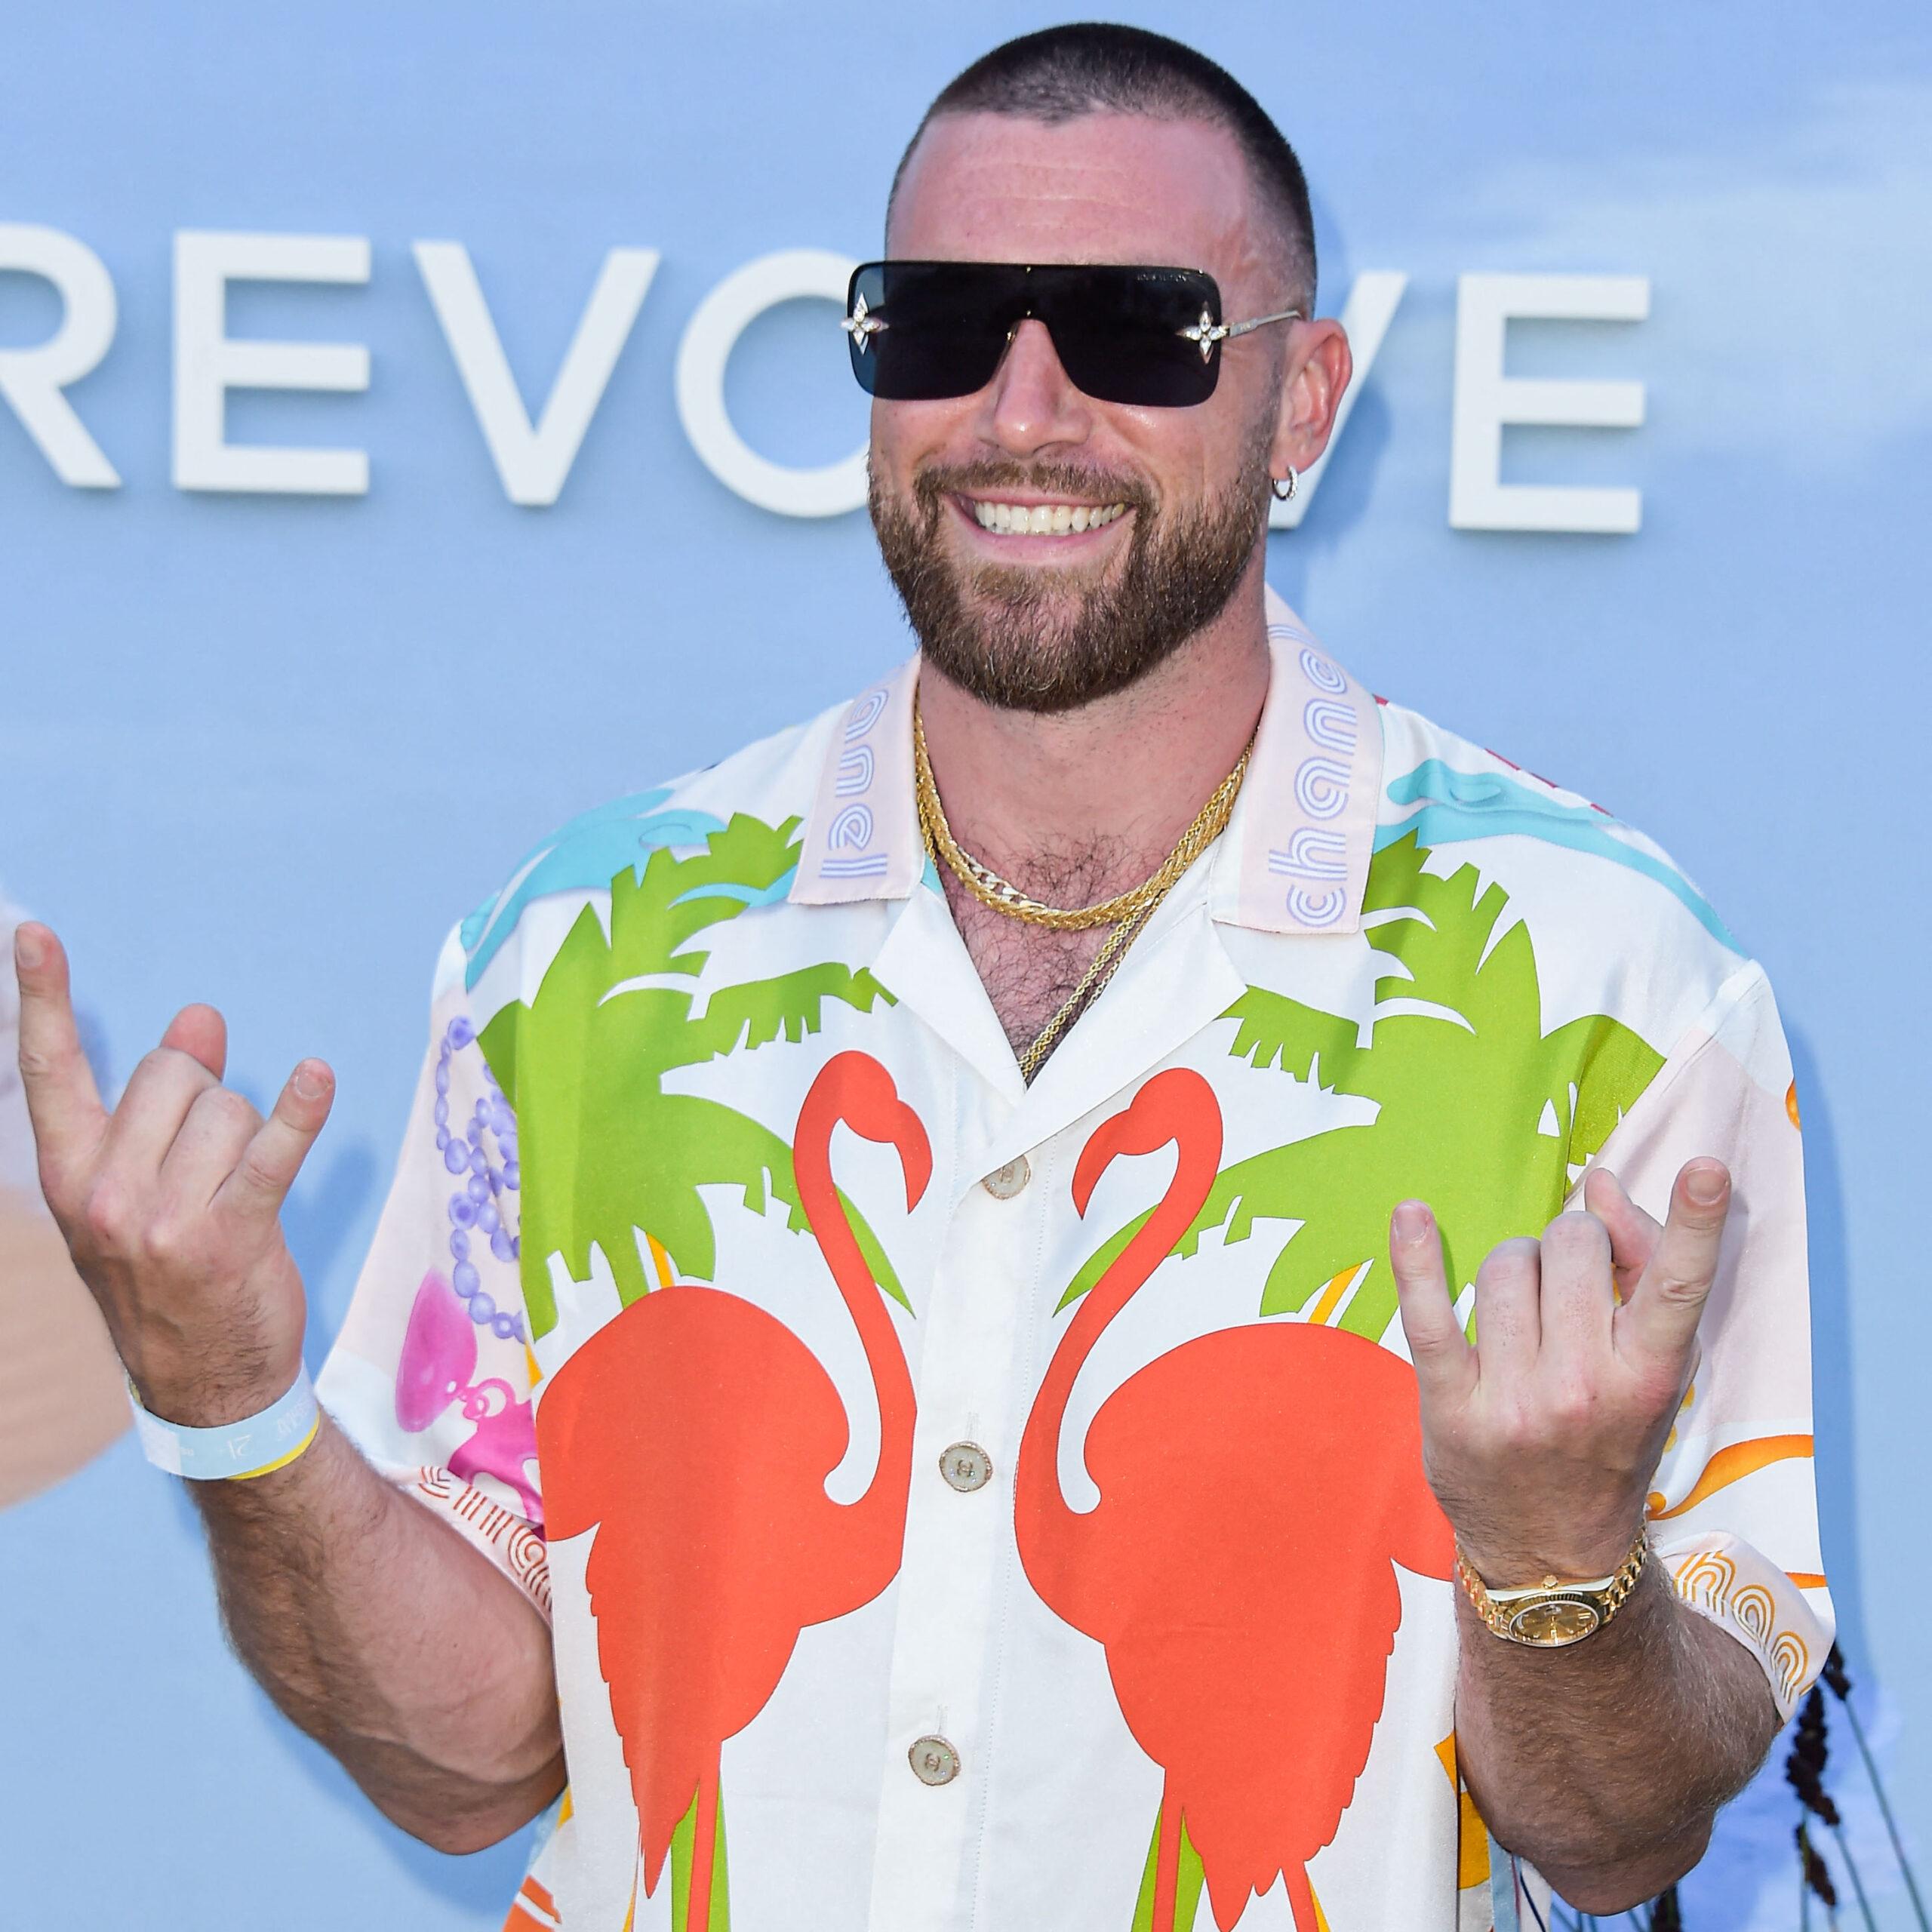 Travis Kelce wears sunglasses at Revolve